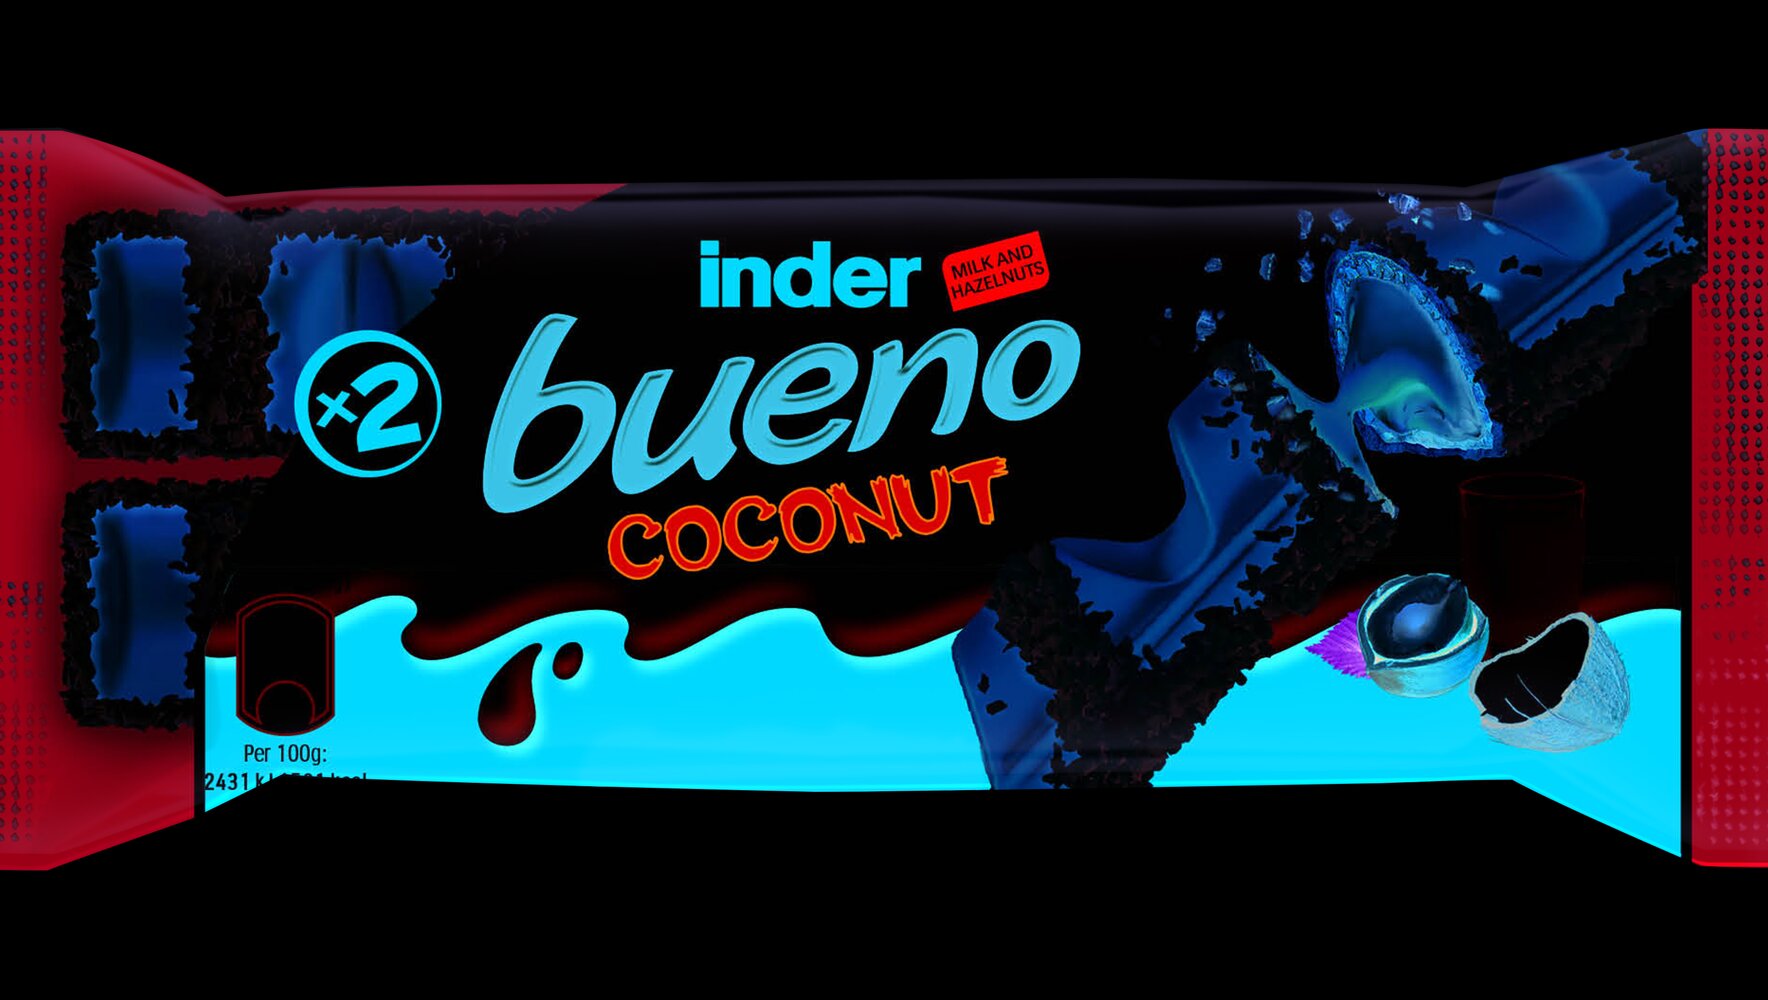 Honey Corner - New Limited Edition Kinder Bueno Coconut